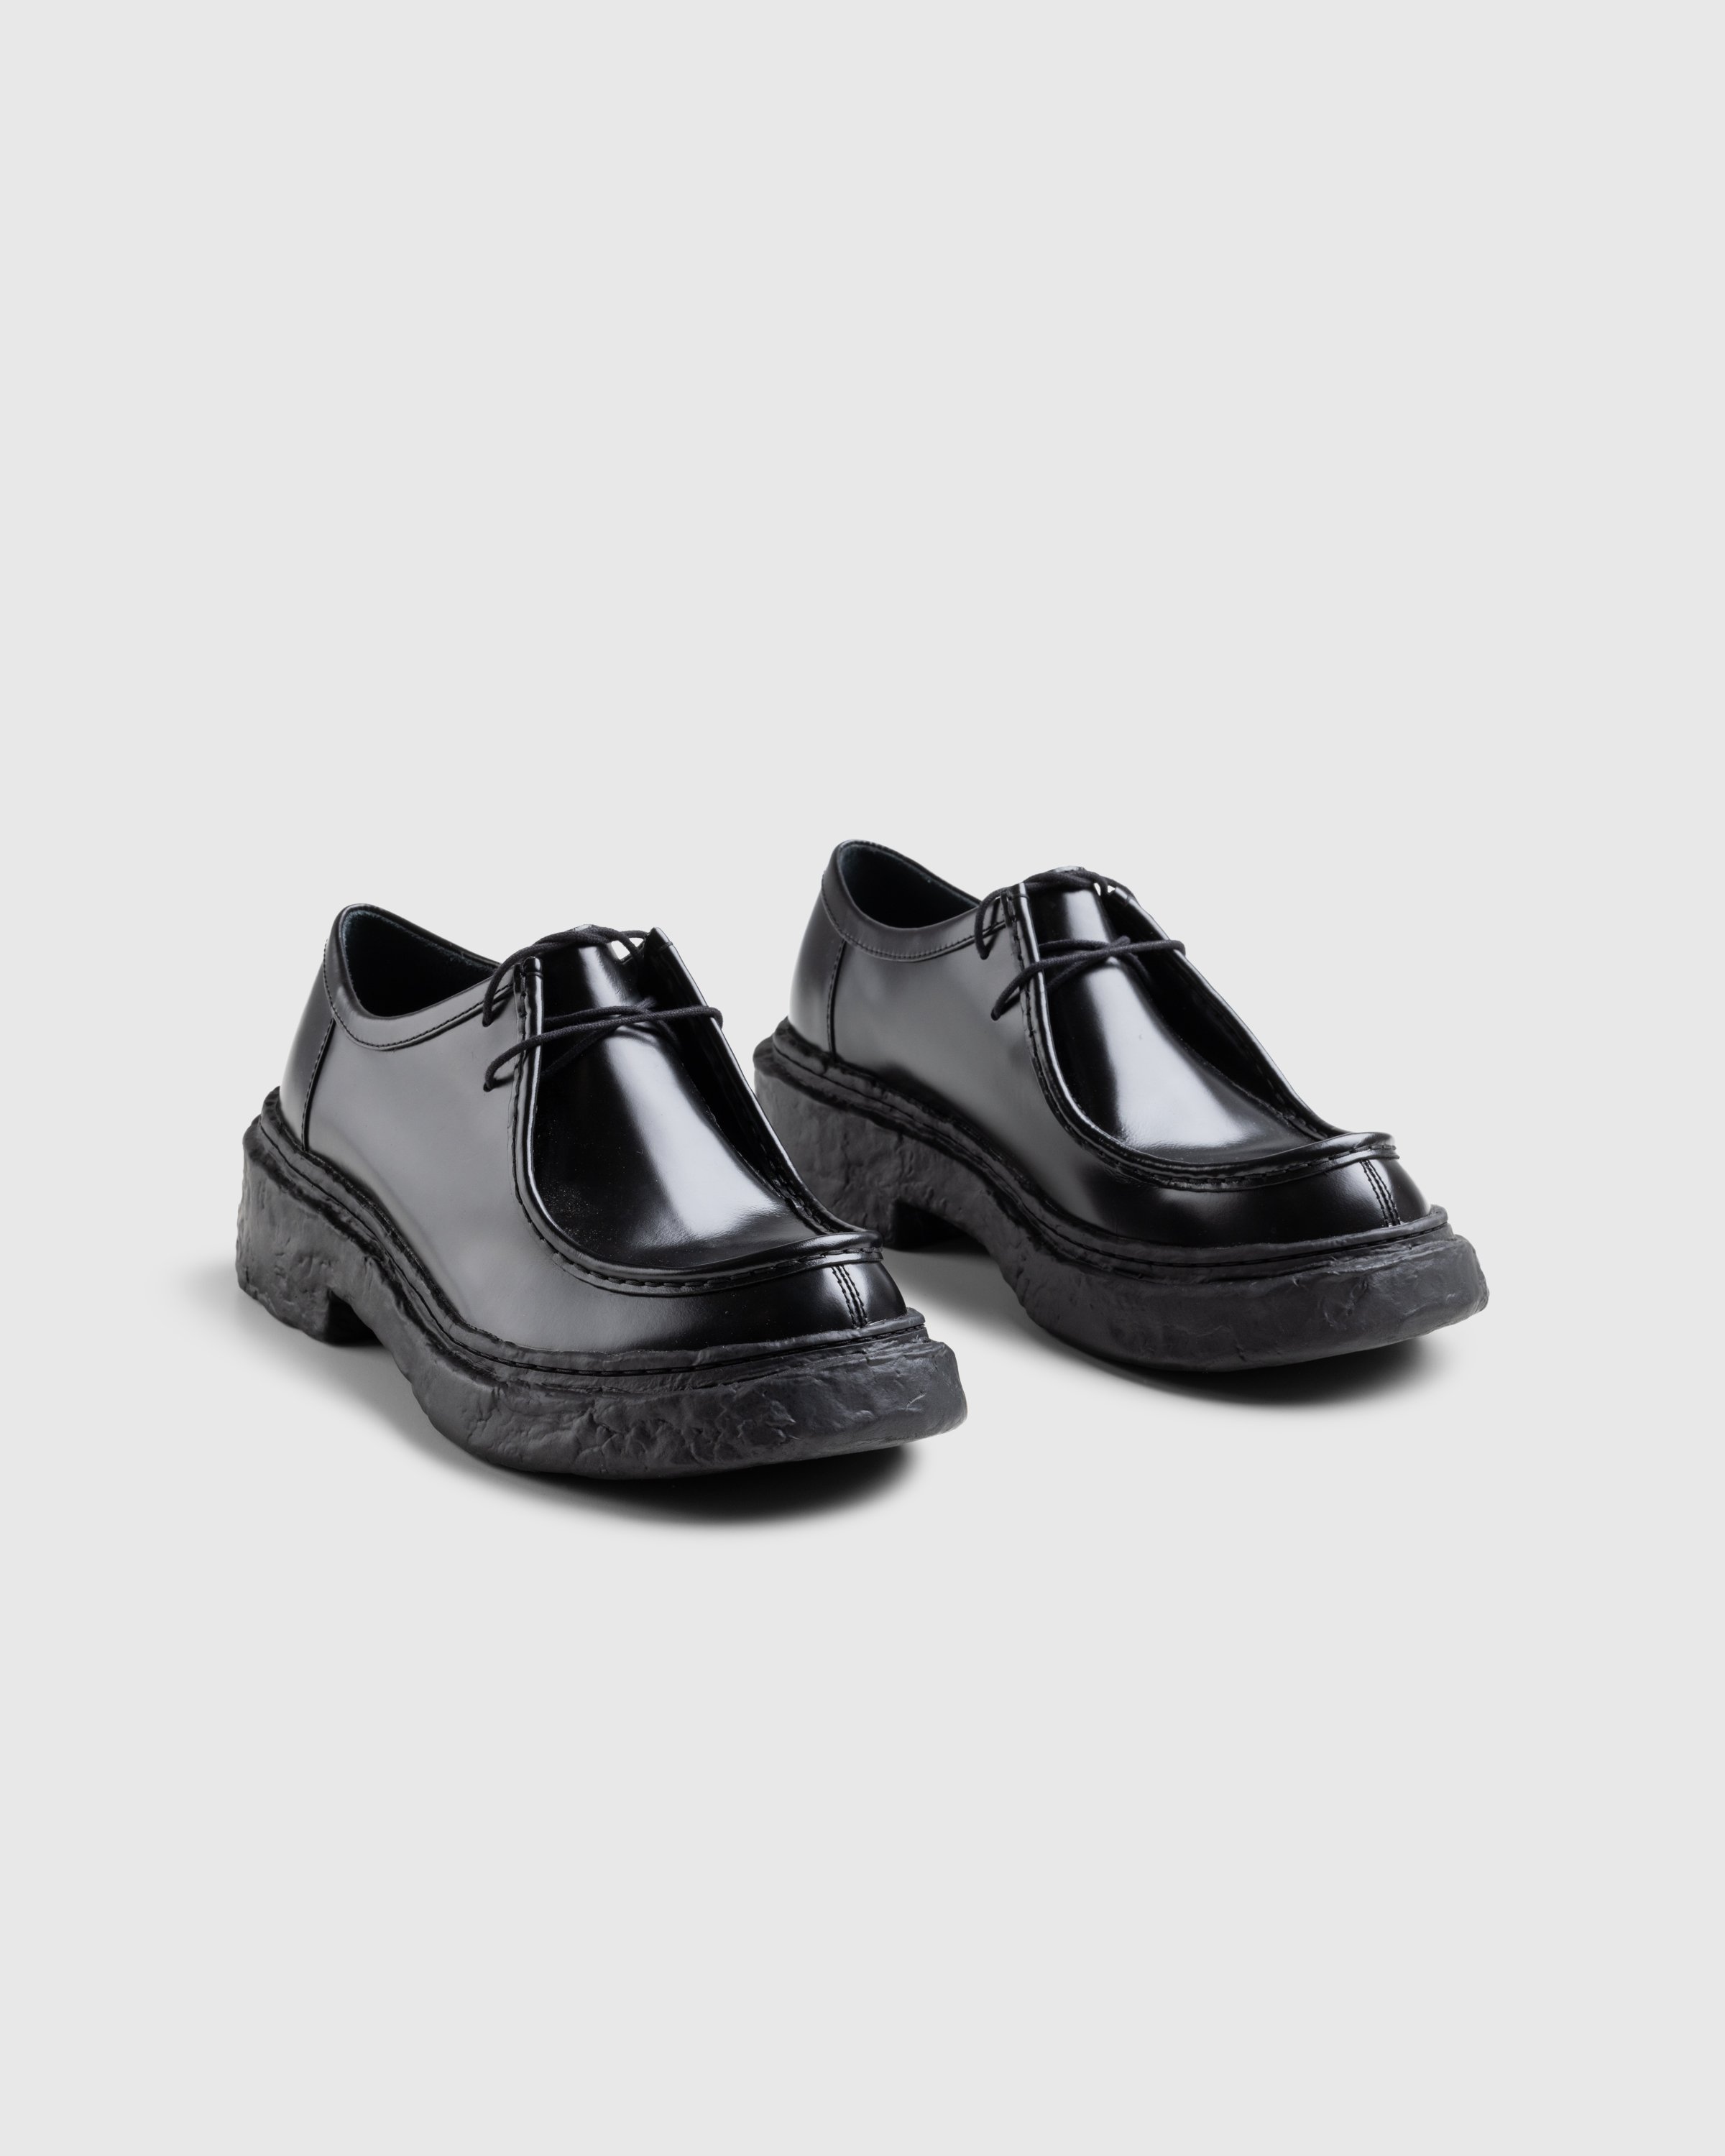 CAMPERLAB - Vamonos - Footwear - Black - Image 3